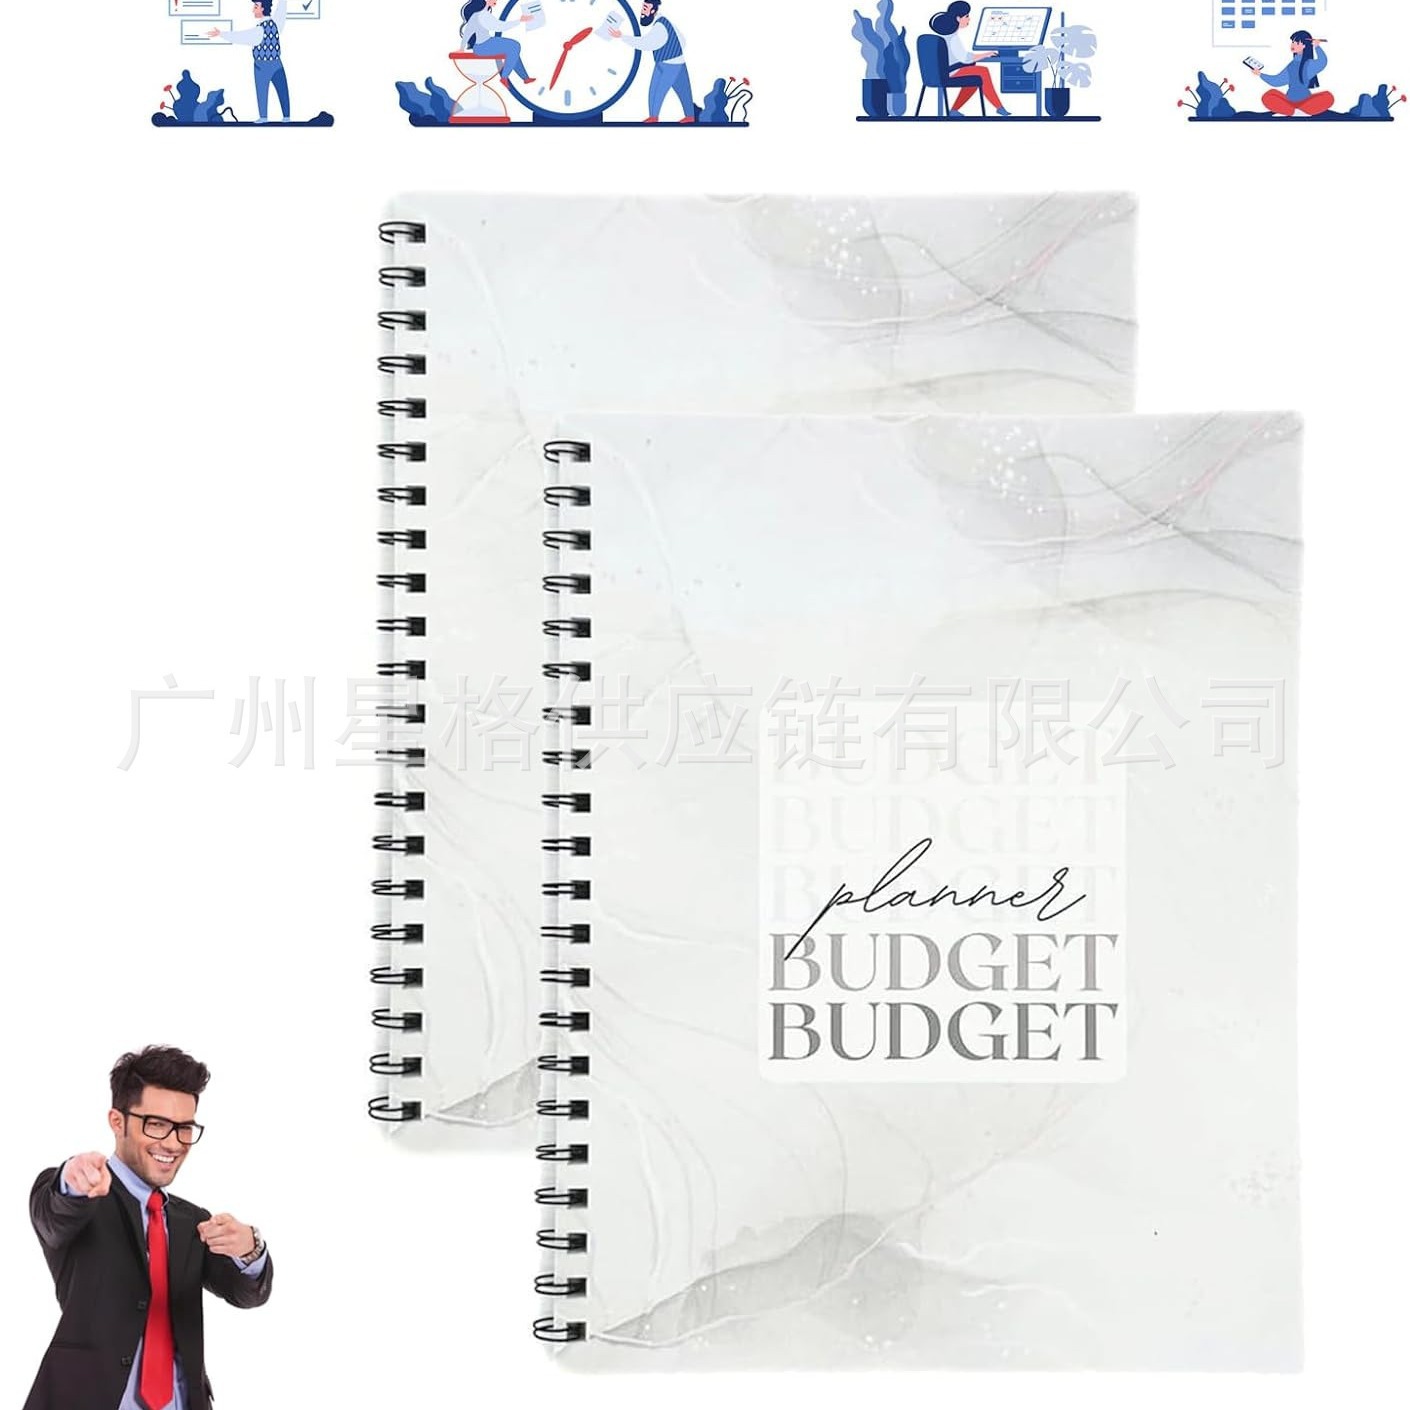 12 Month Undated Budget Planne跨境12个月未注明日期的预算计划